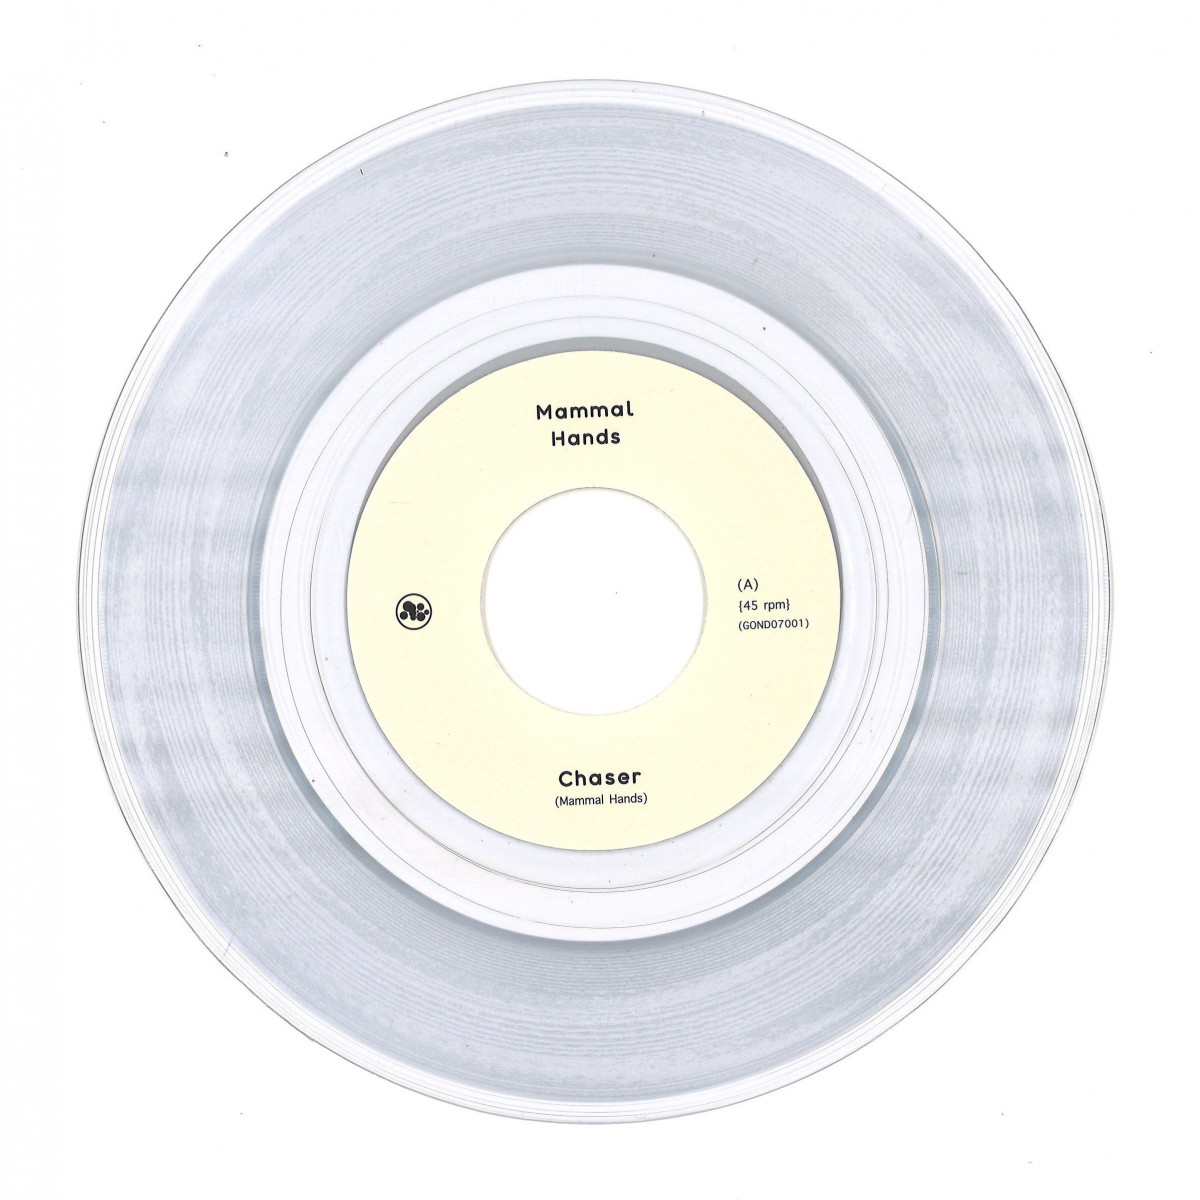 Mammal Hands - Chaser / Prism / Gondwana Records GOND07001 - Vinyl